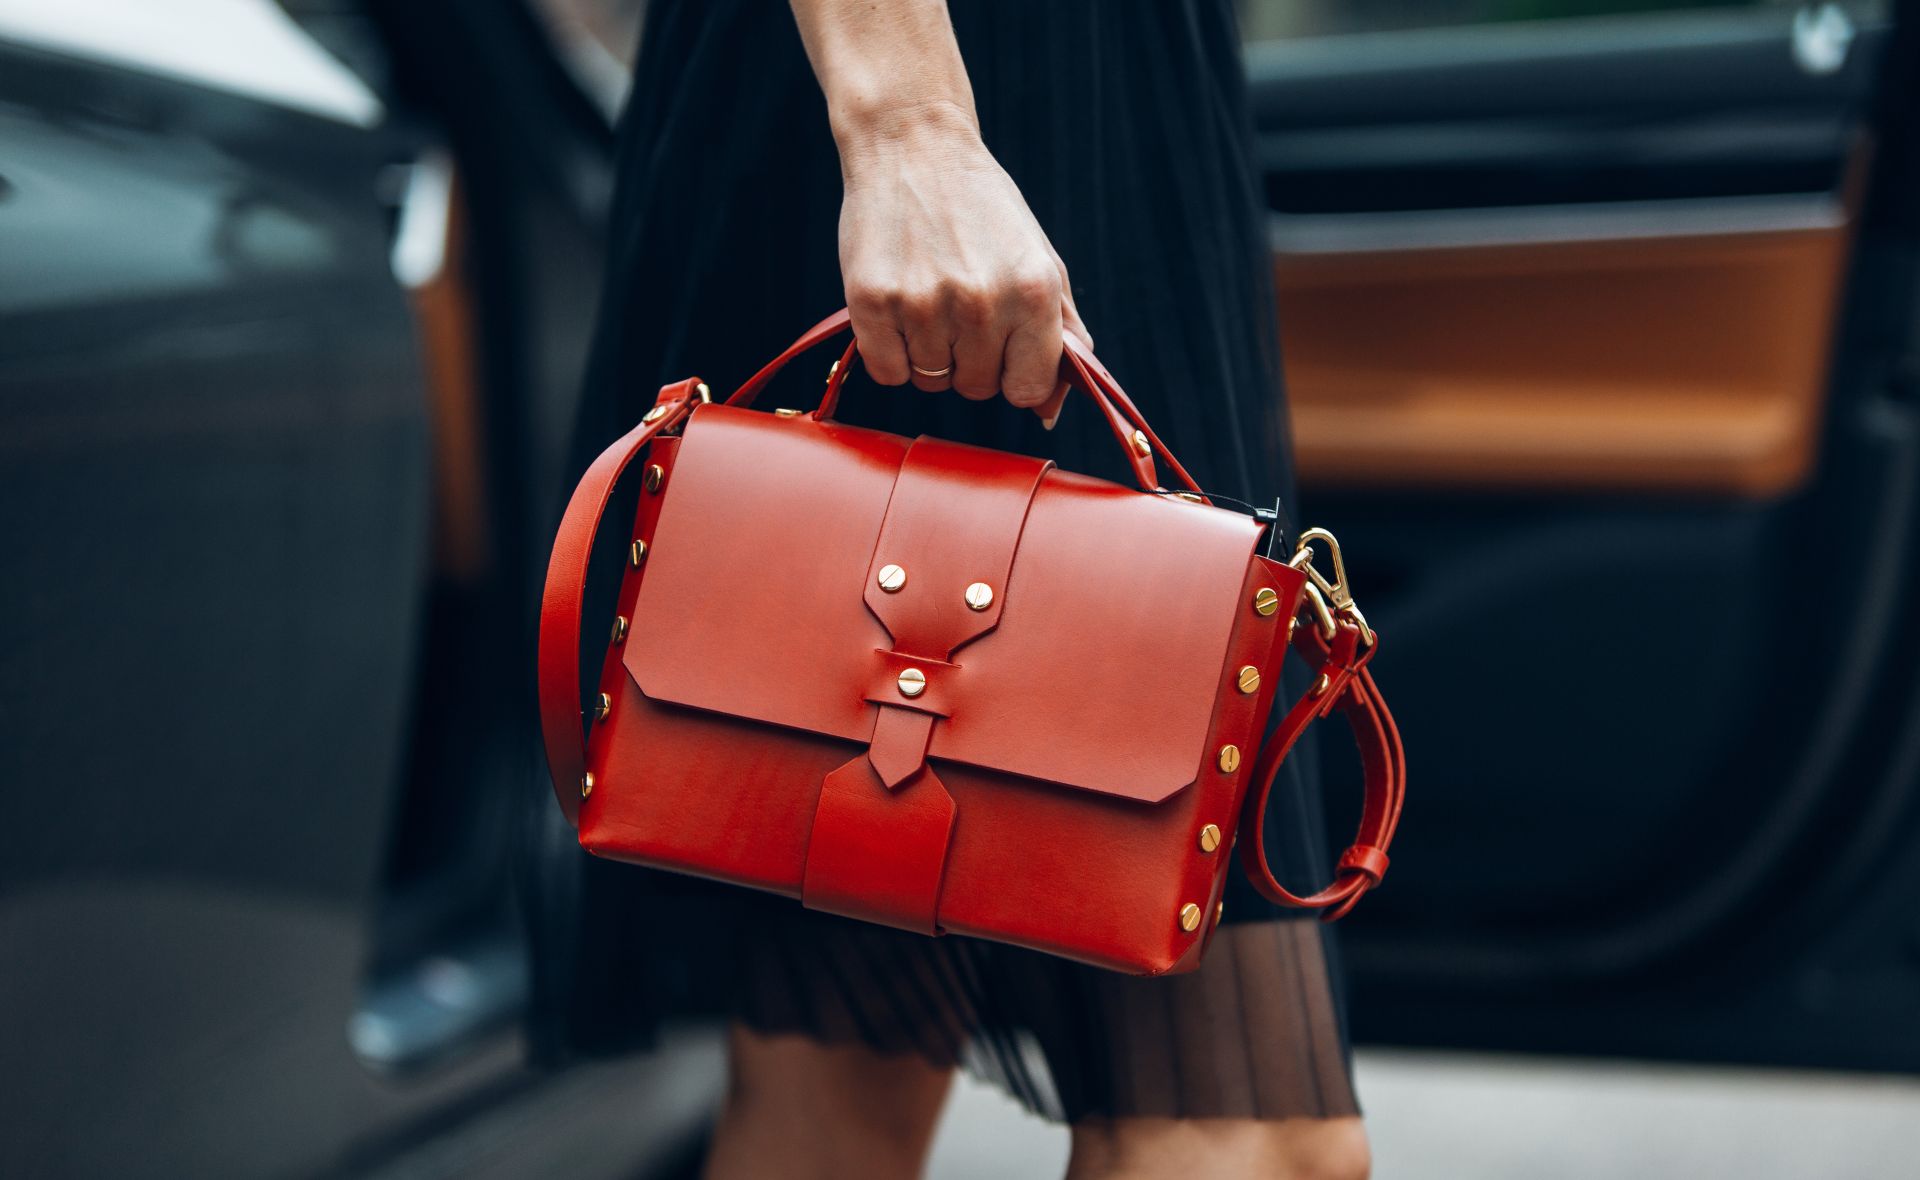 Get huge savings on handbags with these Black Friday sales